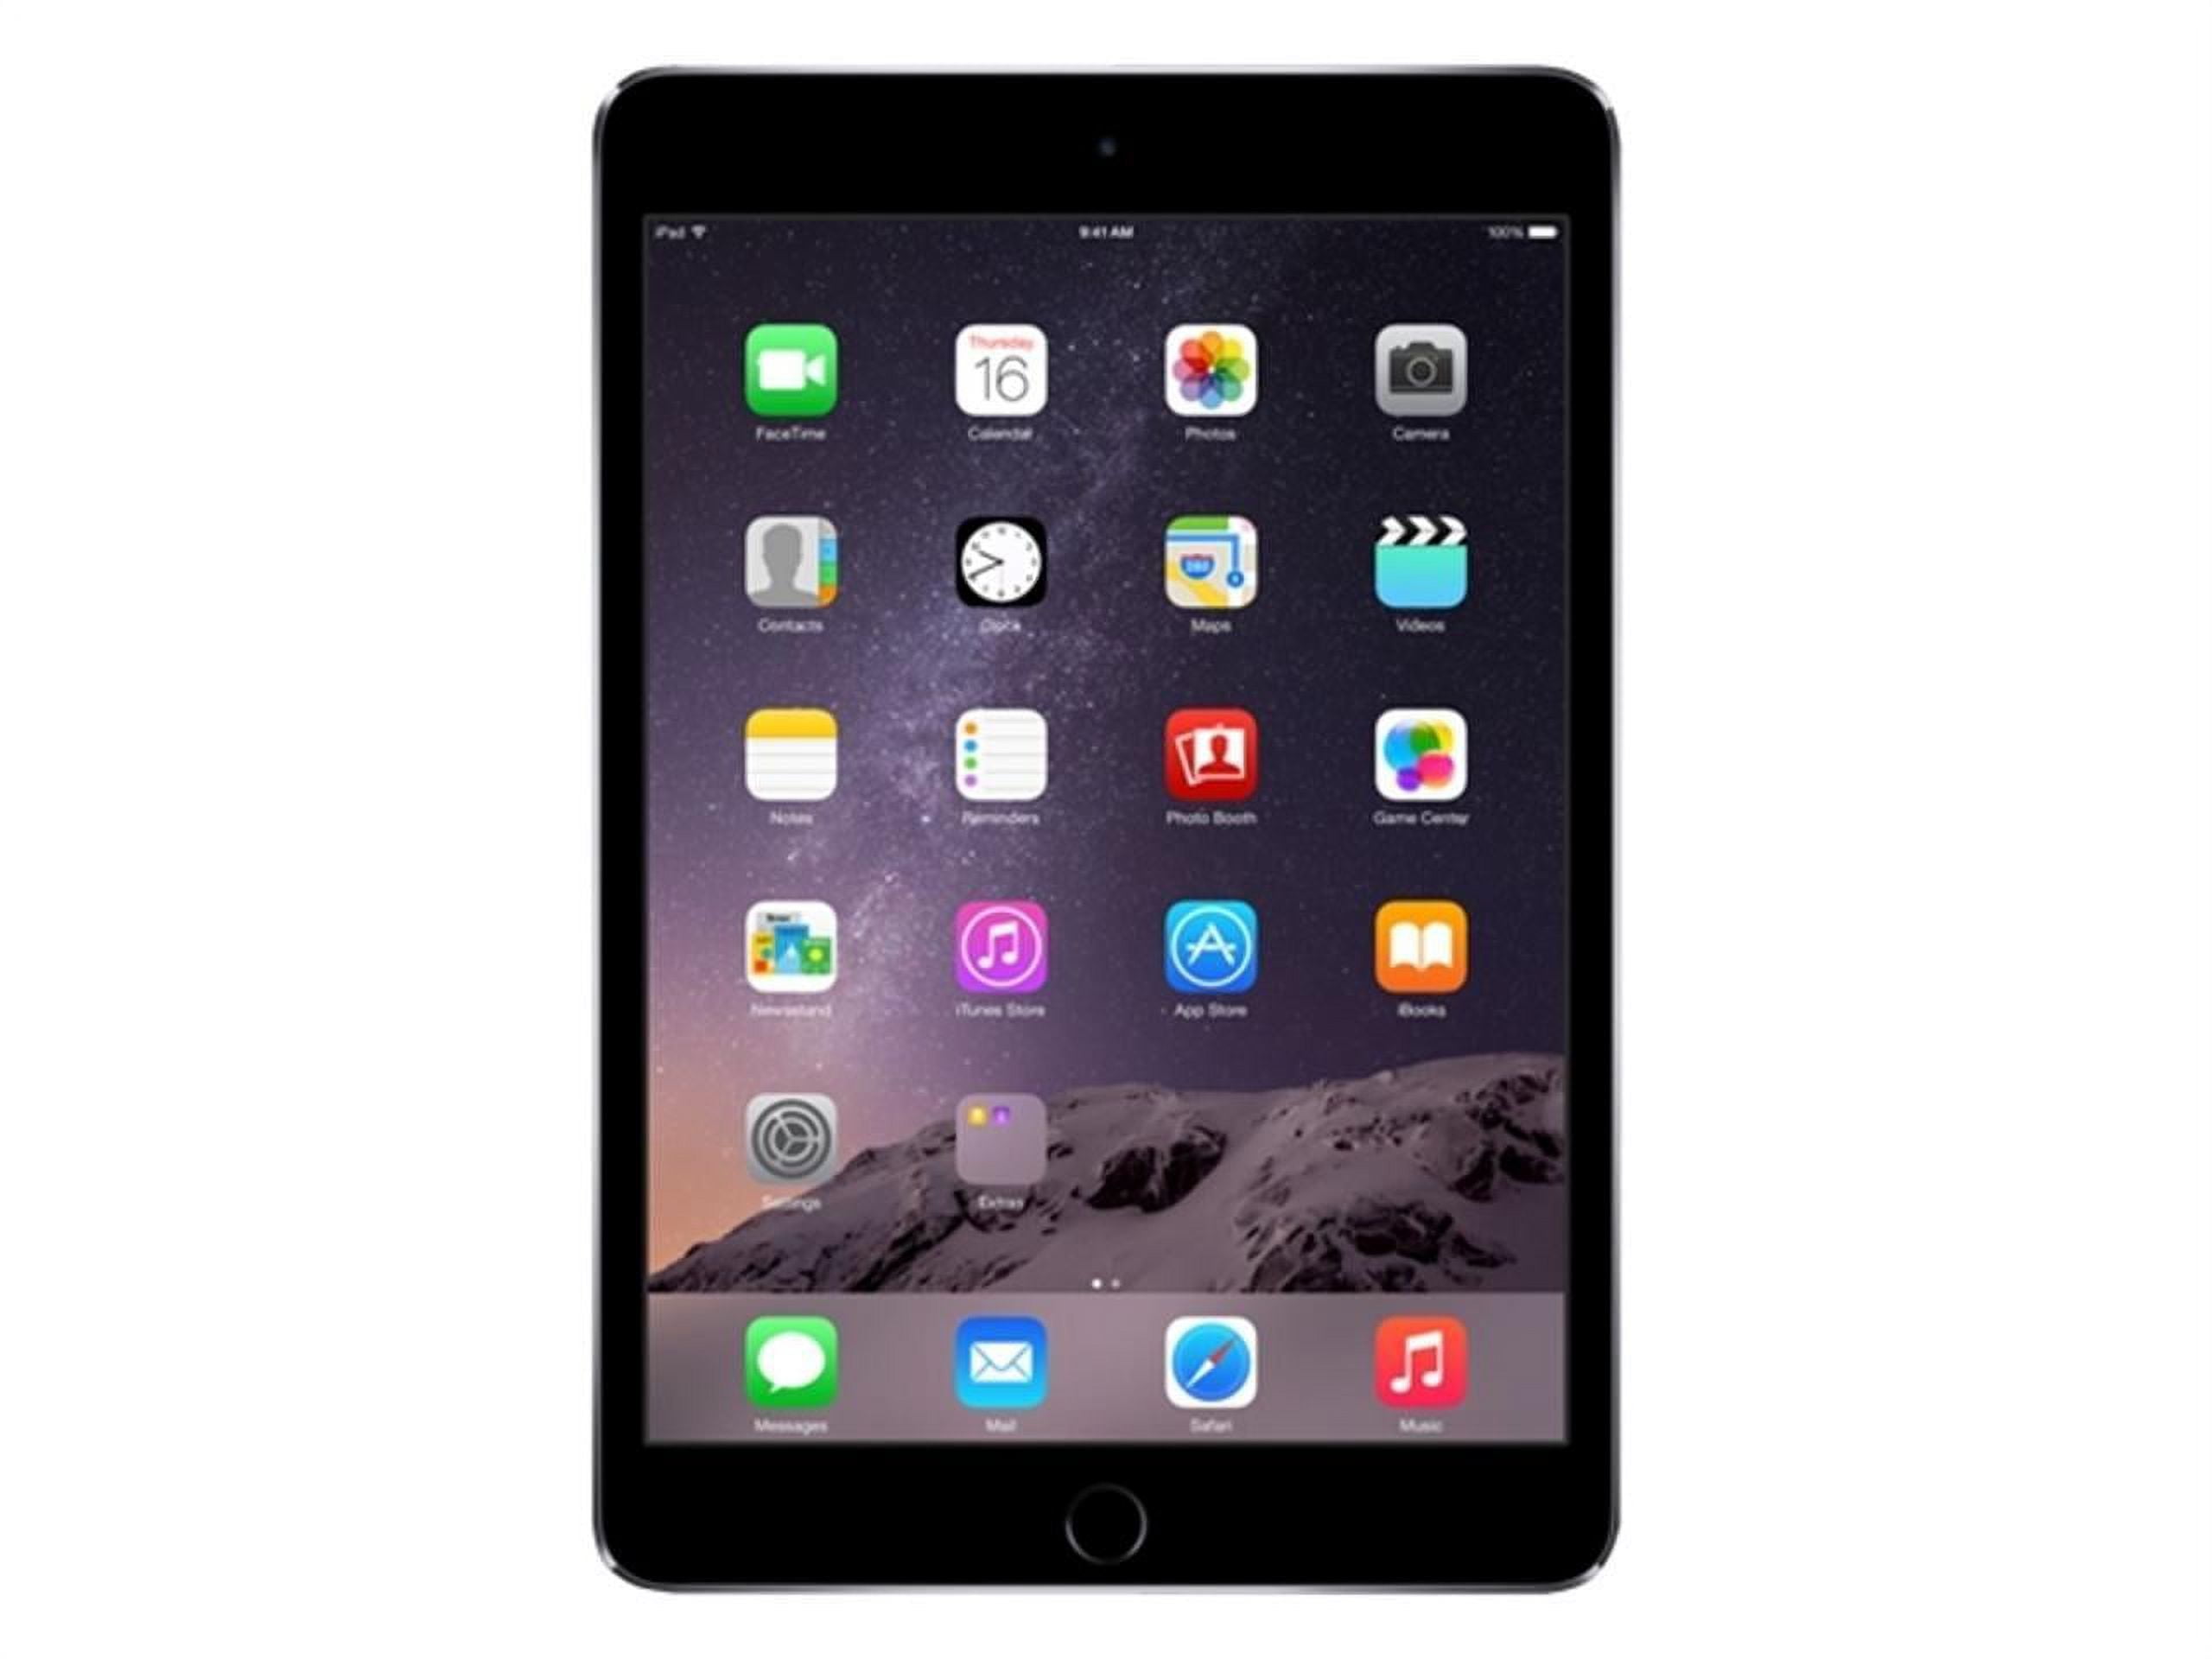 Apple iPad mini 3 16GB Space Gray - Wi-Fi - Pre-Owned - Walmart.com